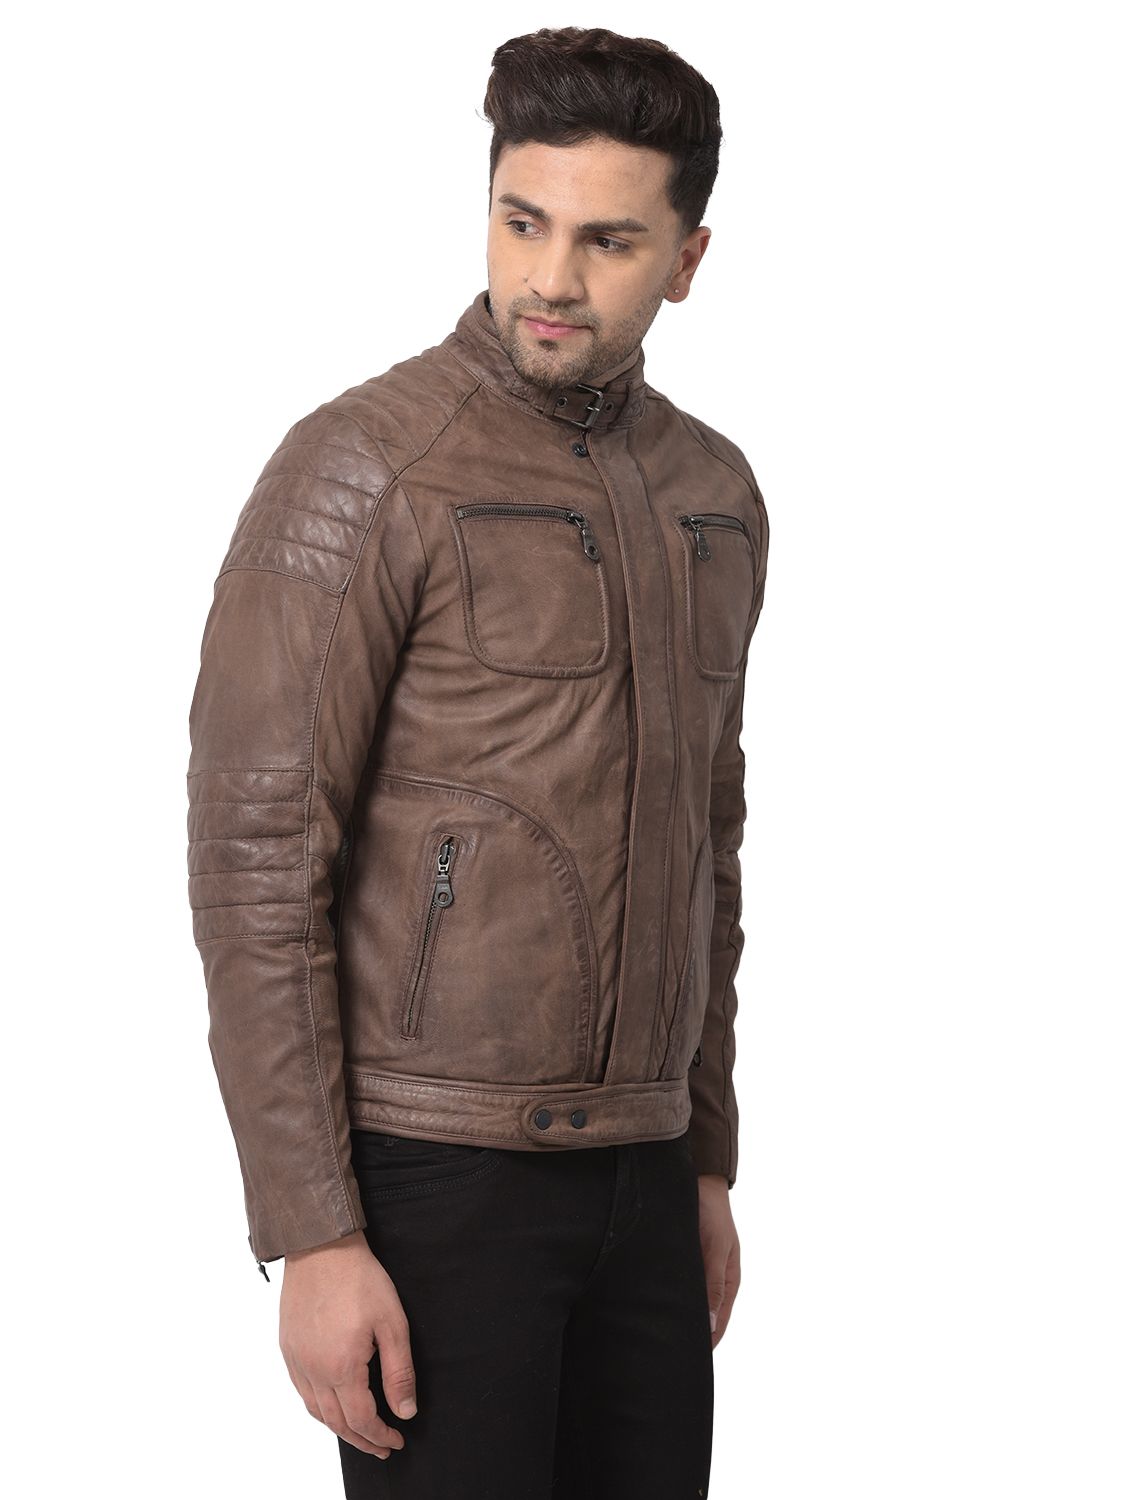 REI Zip Coats, Jackets & Vests for Men for Sale | Shop New & Used | eBay